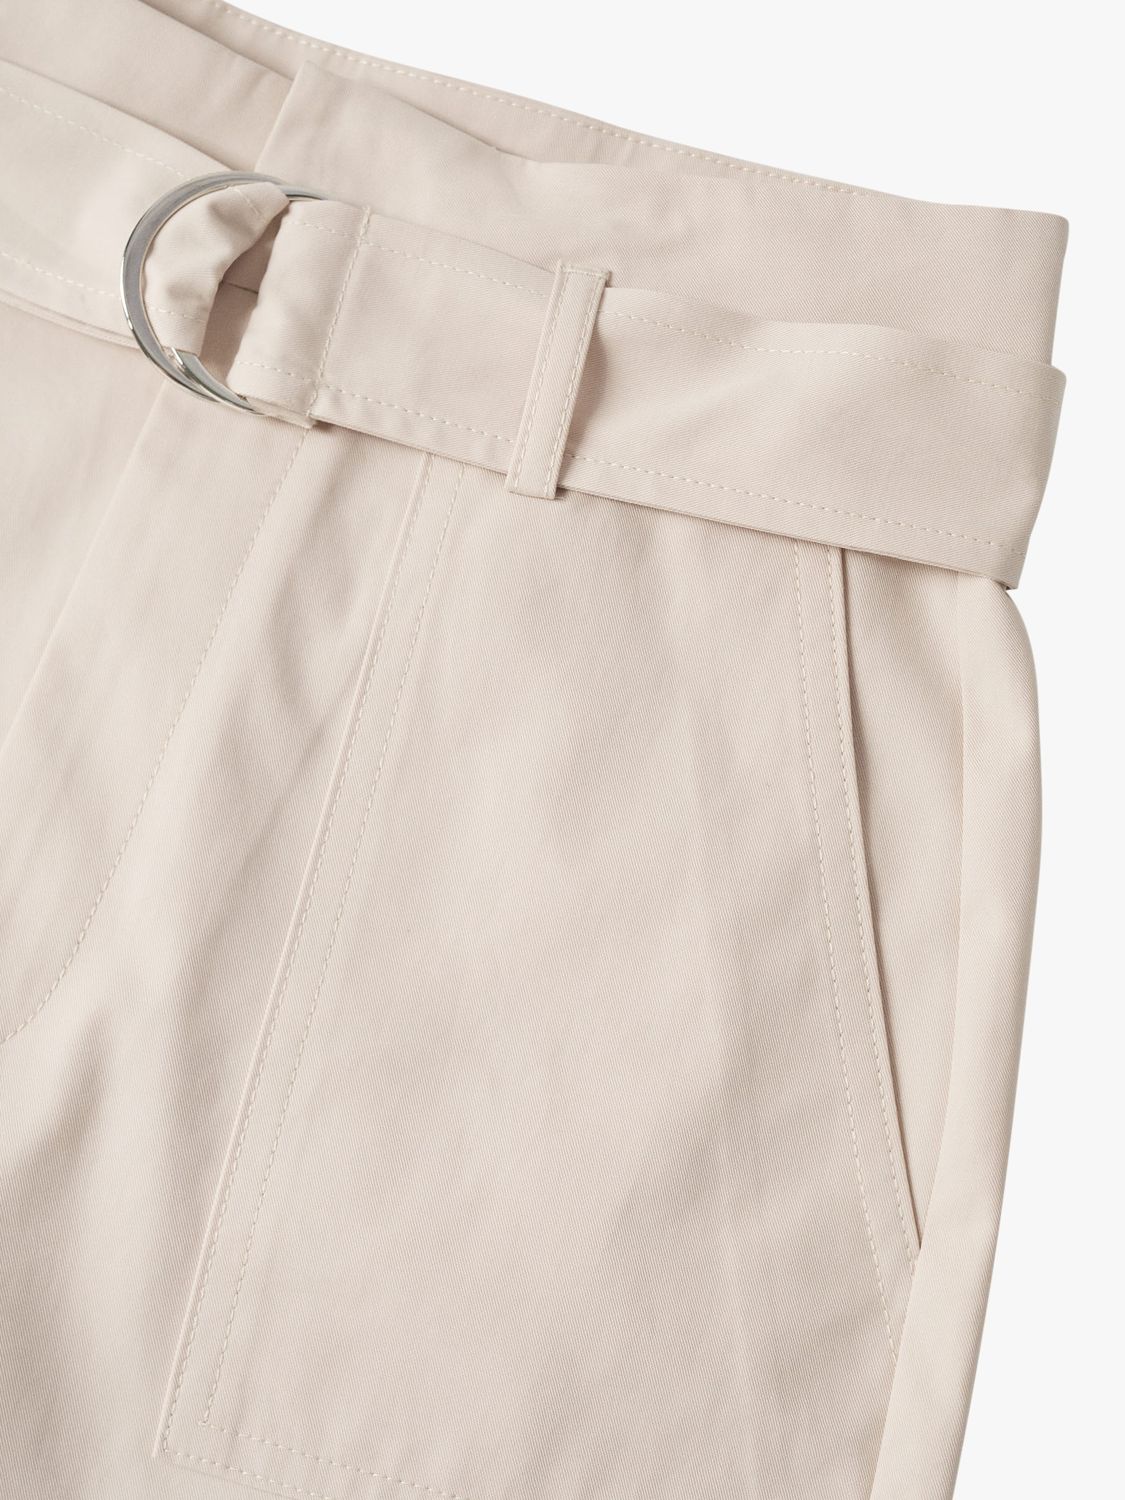 Mango Lolo Utility Trousers, Pastel Brown at John Lewis & Partners